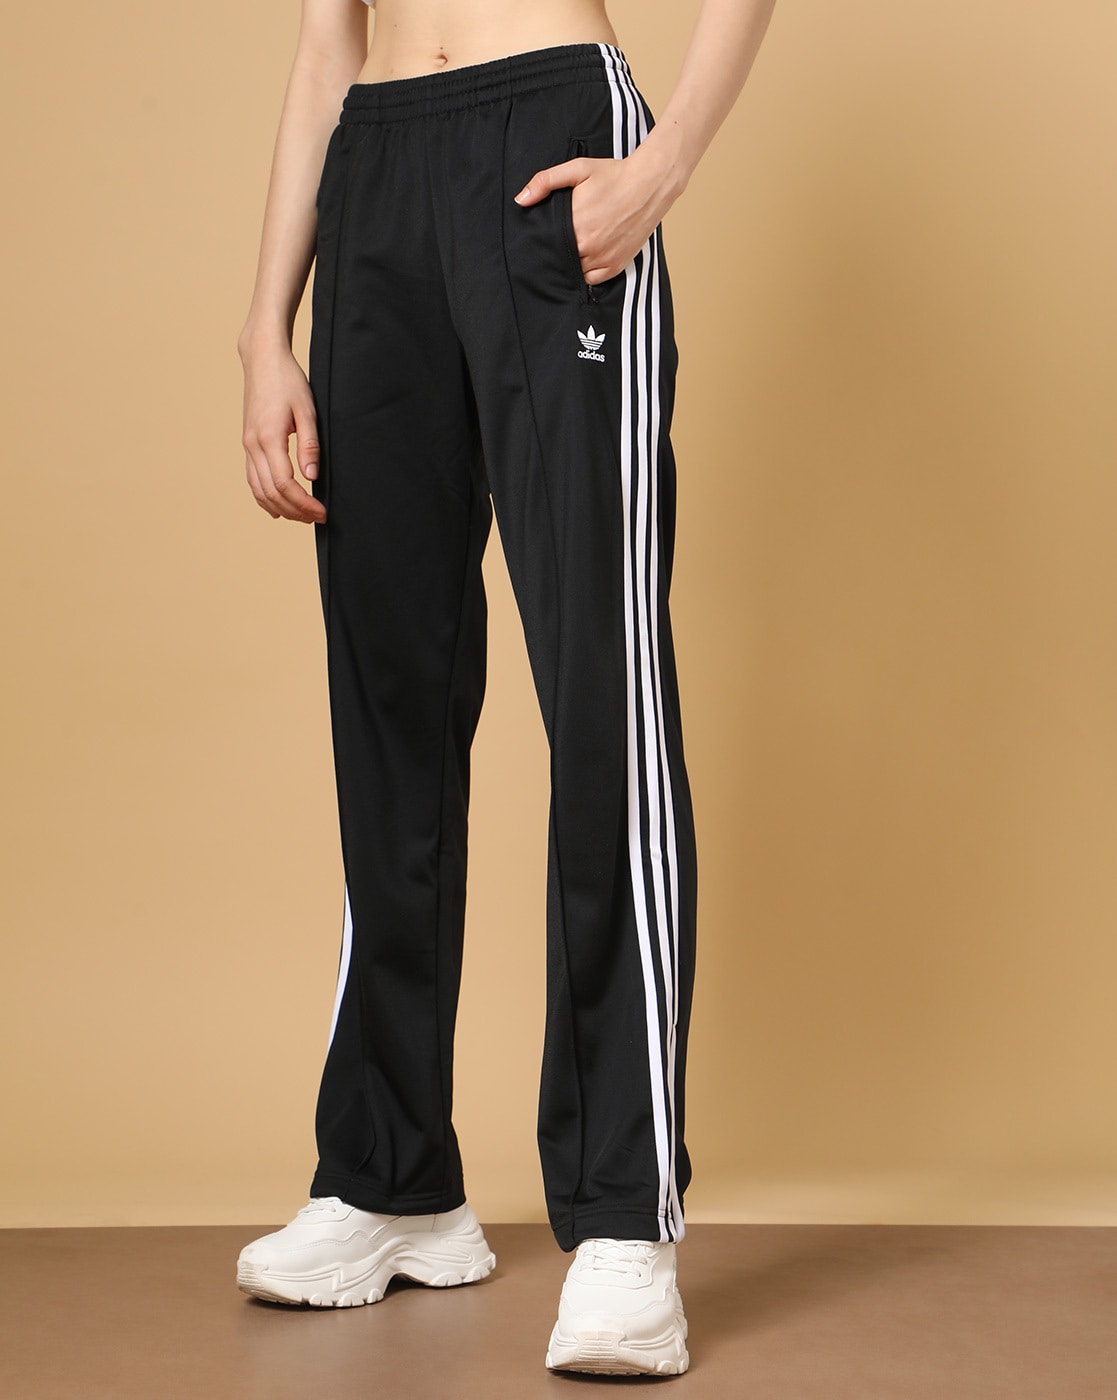 Adidas Originals 3-Stripes Women's Athletic Track Pants Black/White